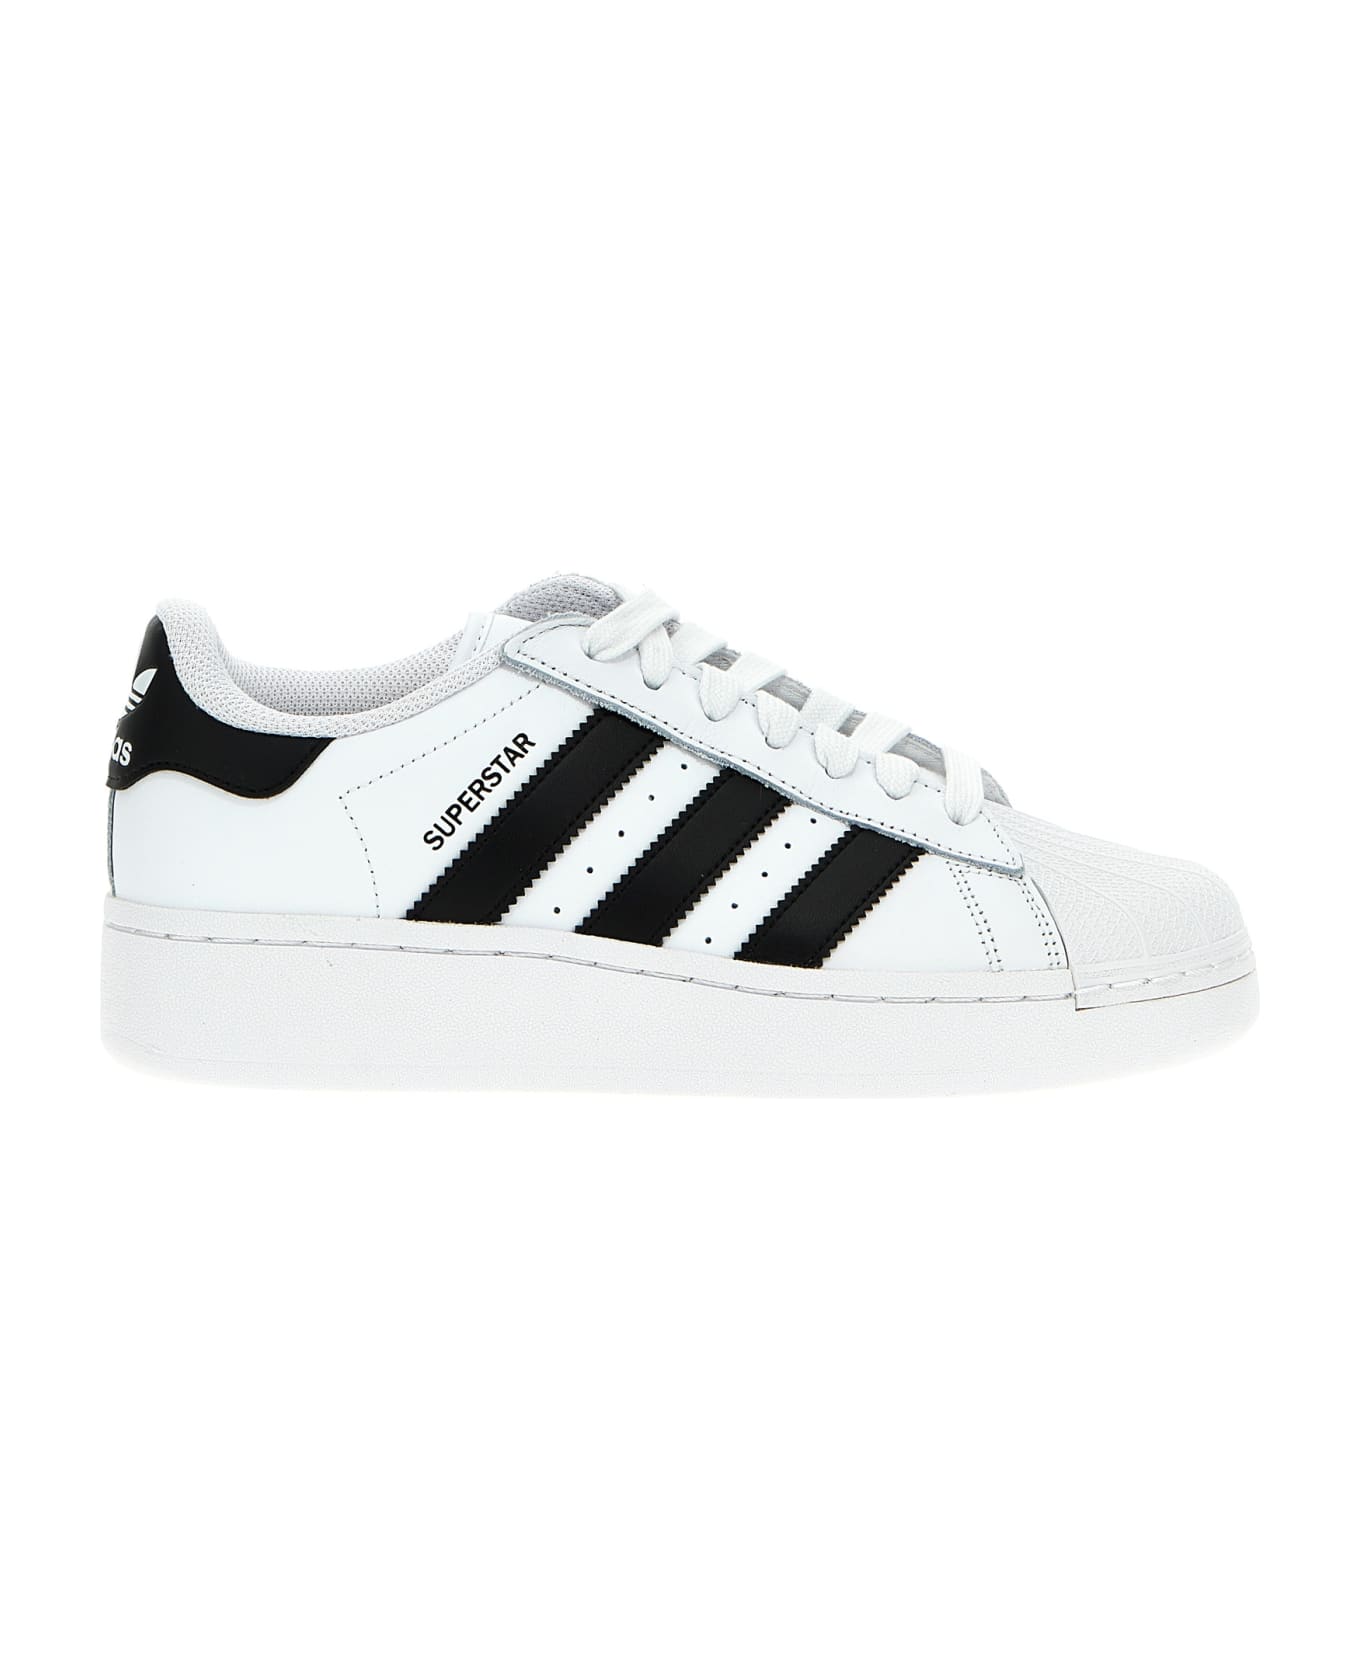 Adidas Originals 'superstar Xlg' Sneakers - White/Black